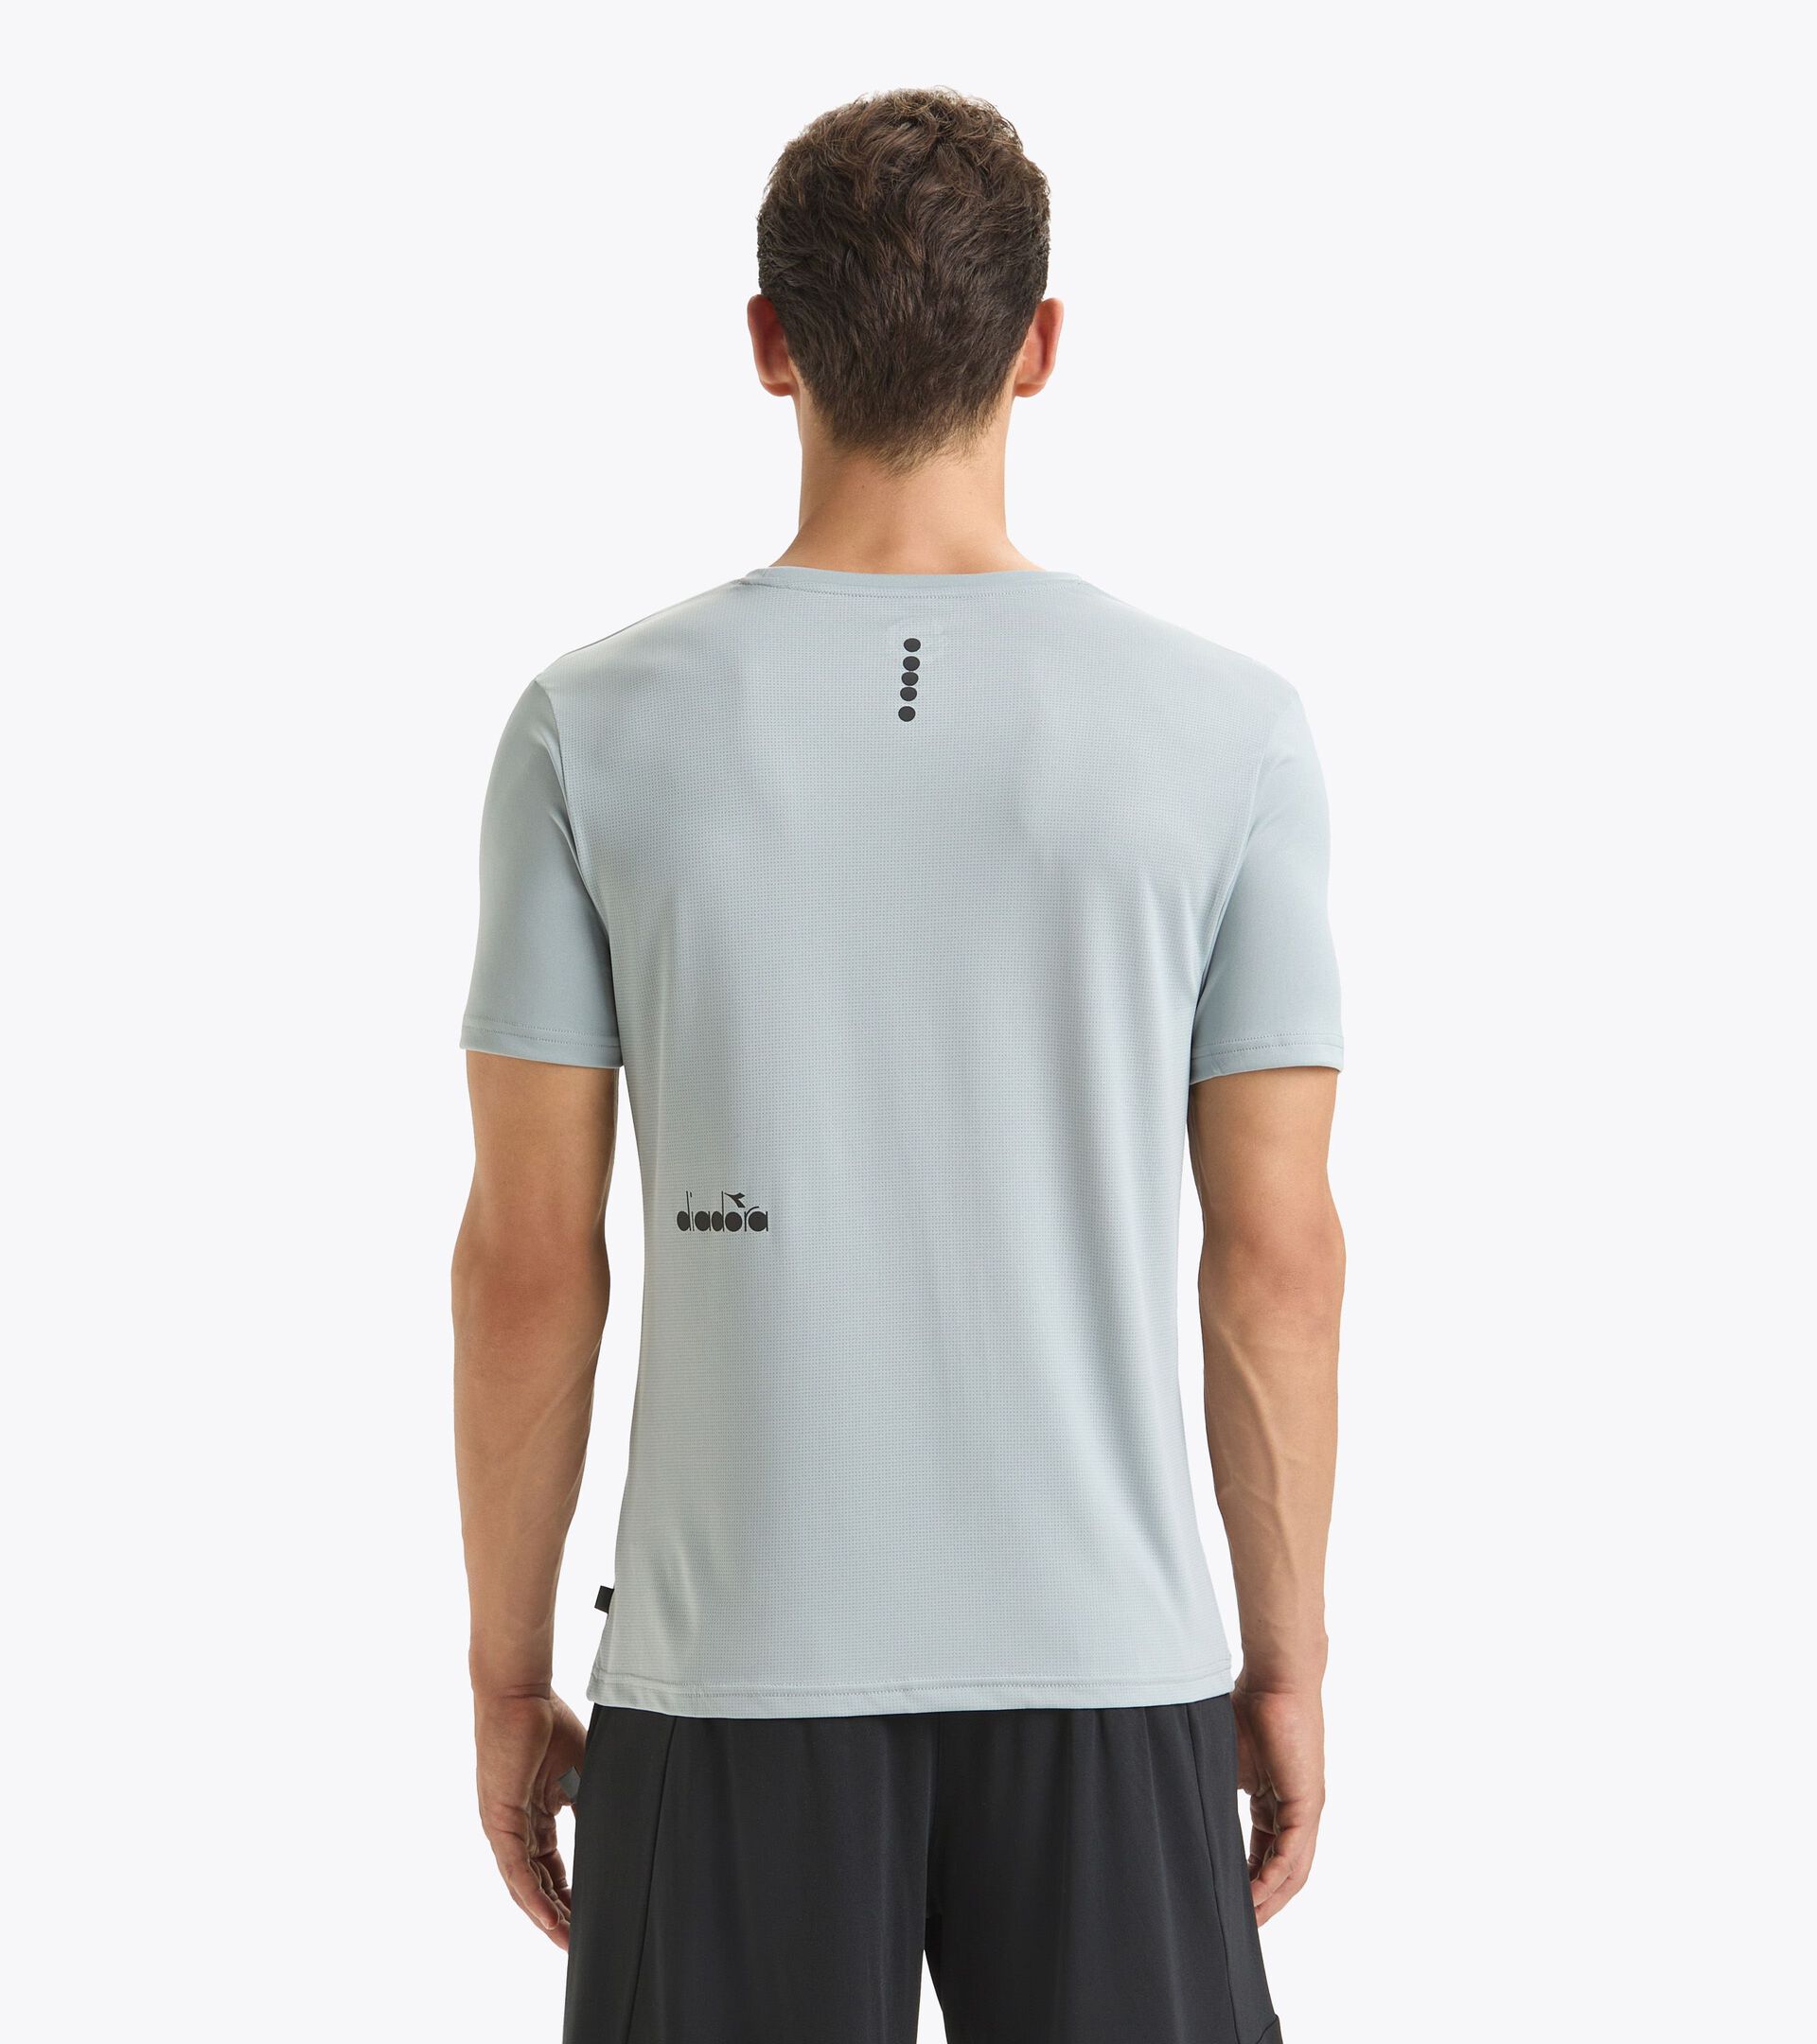 Sportliches T-Shirt - Herren SS T-SHIRT RUN LETZTE GRAU - Diadora